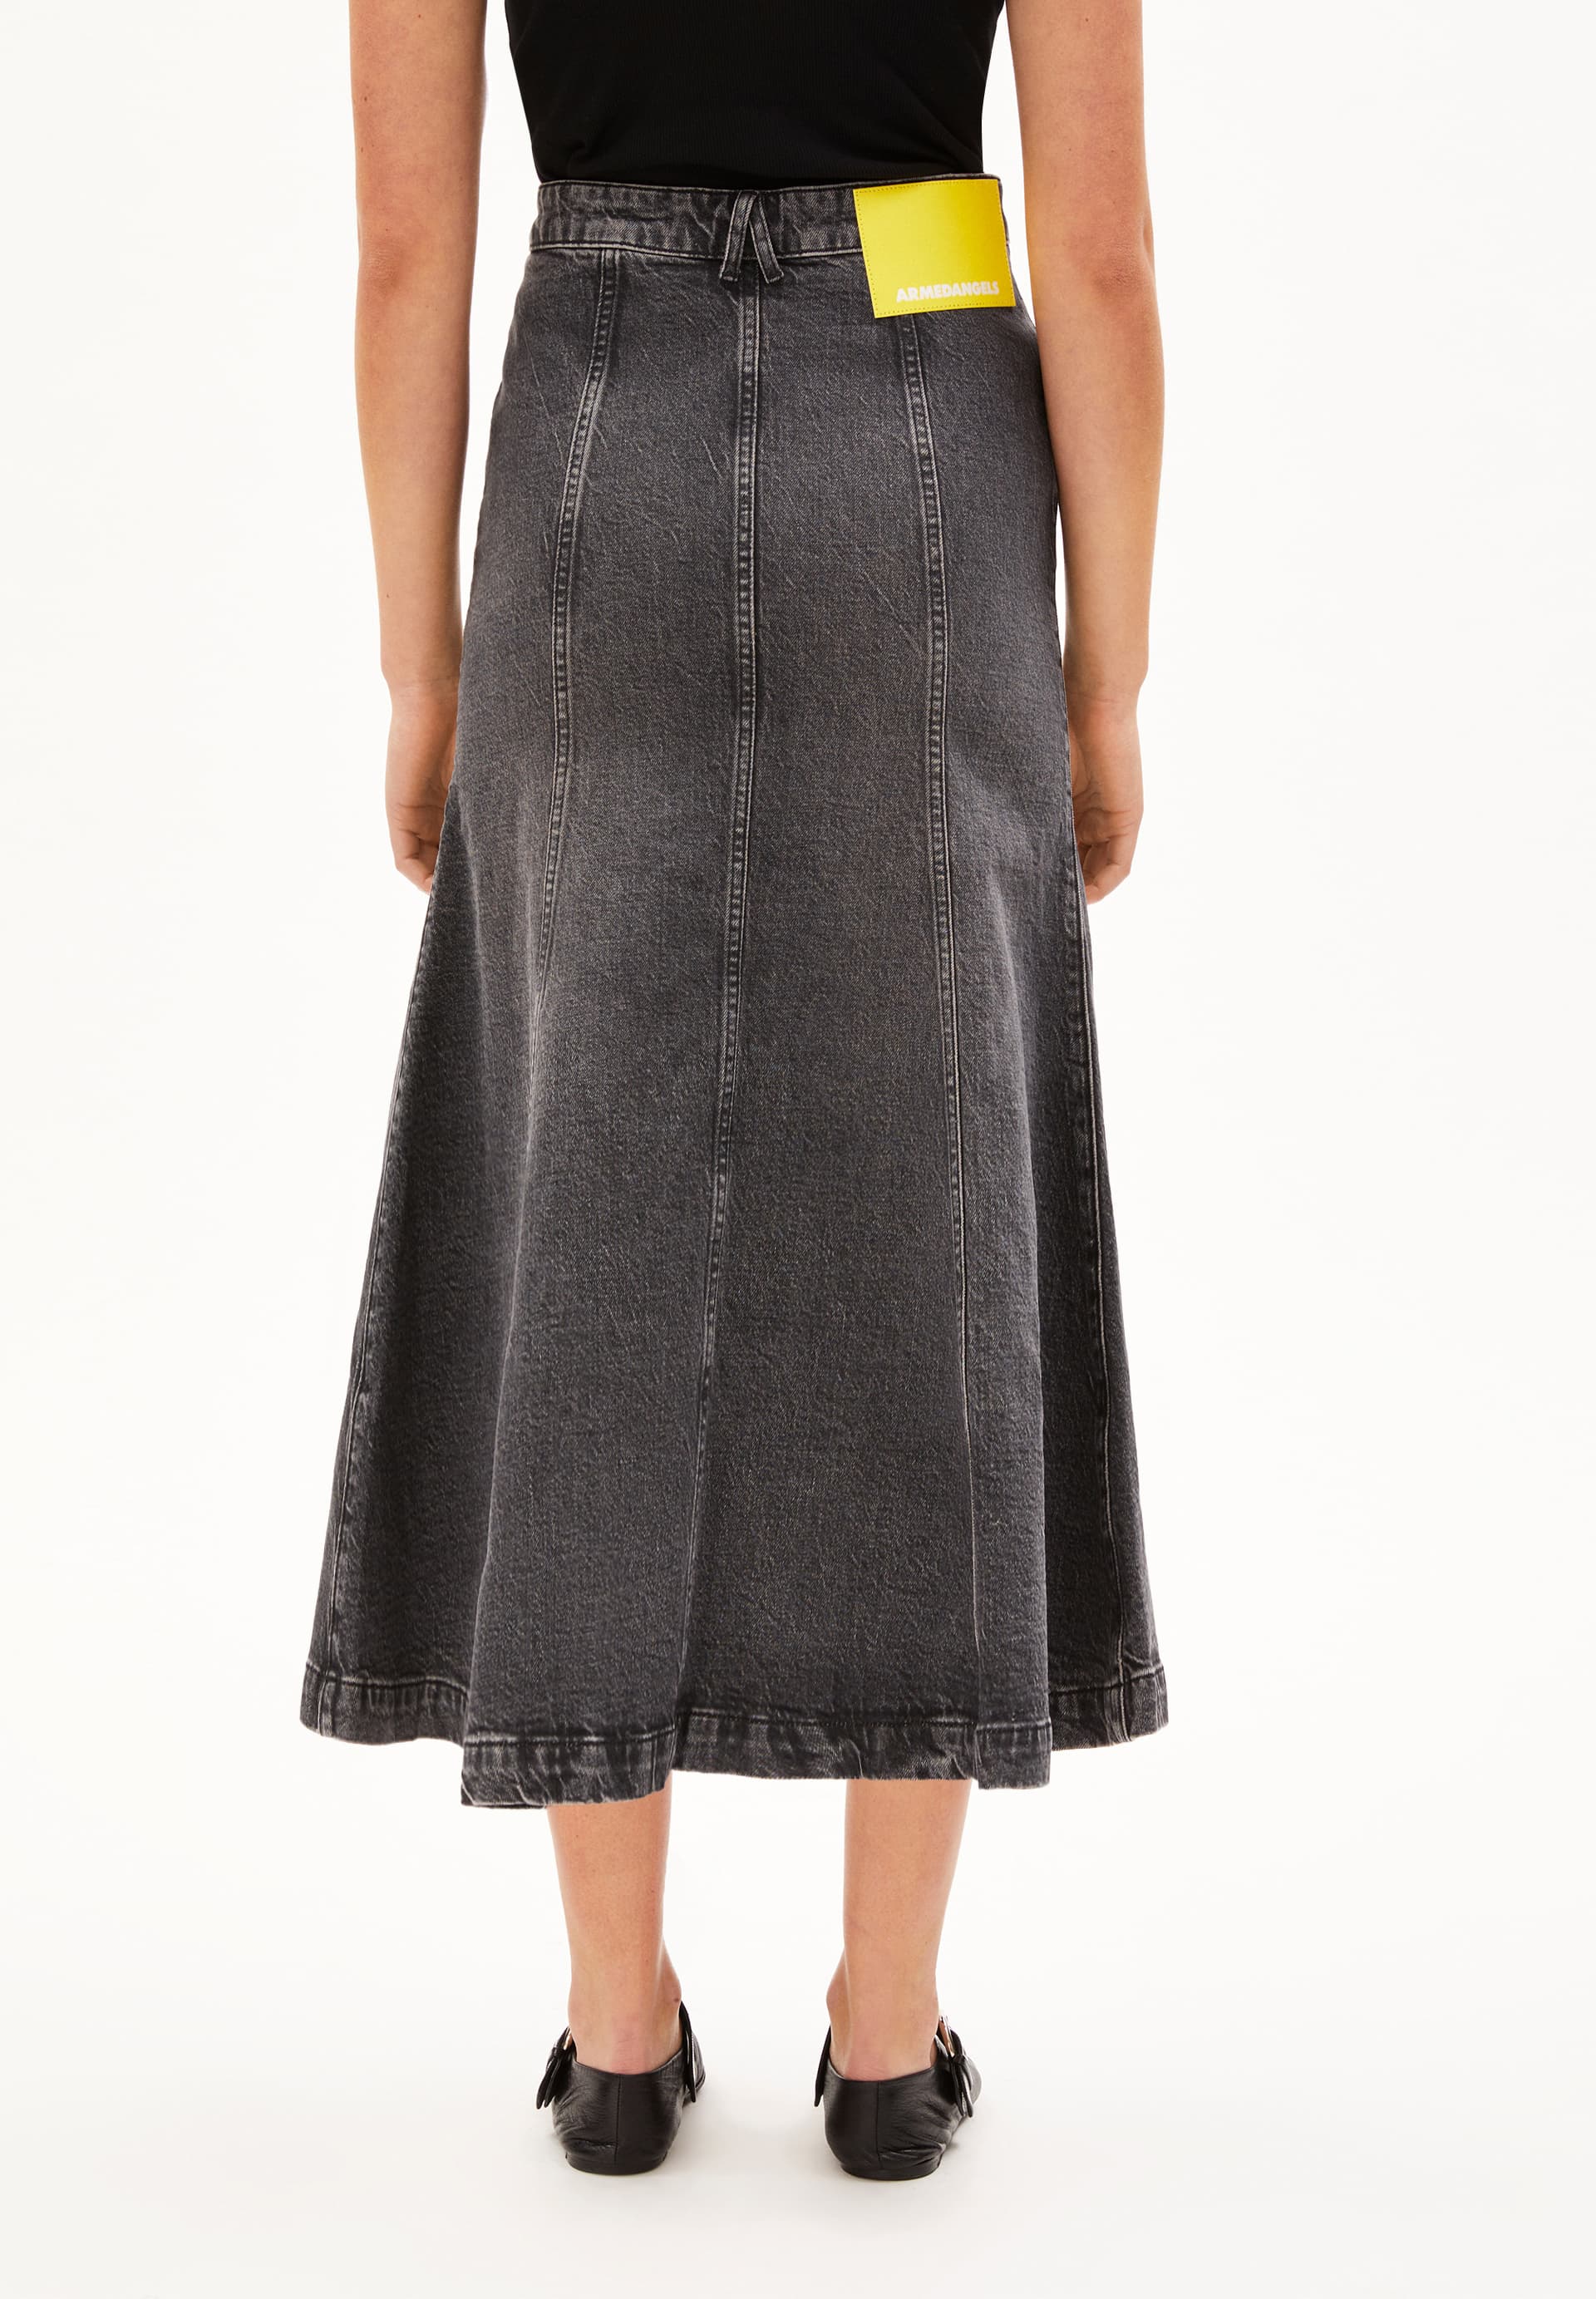 ARIENAA Denim Skirt Slim Fit made of Organic Cotton Mix